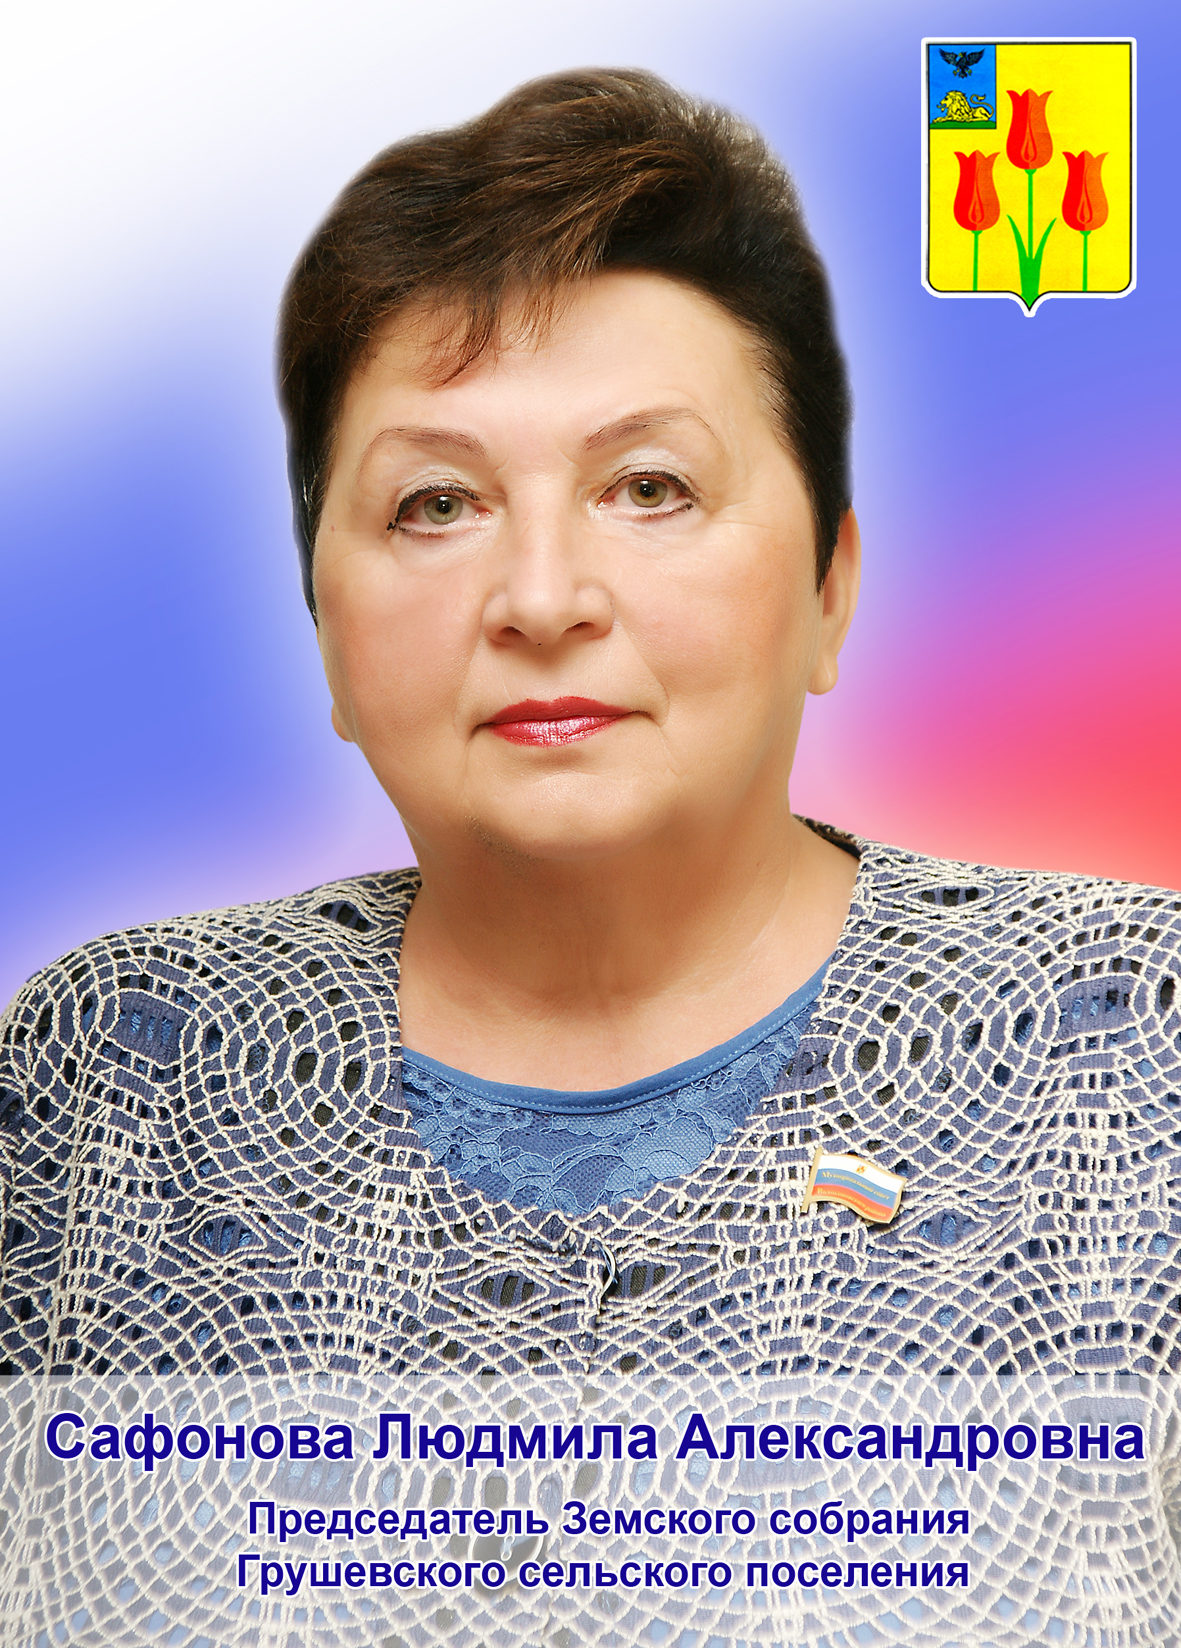 Сафонова Людмила Александровна.